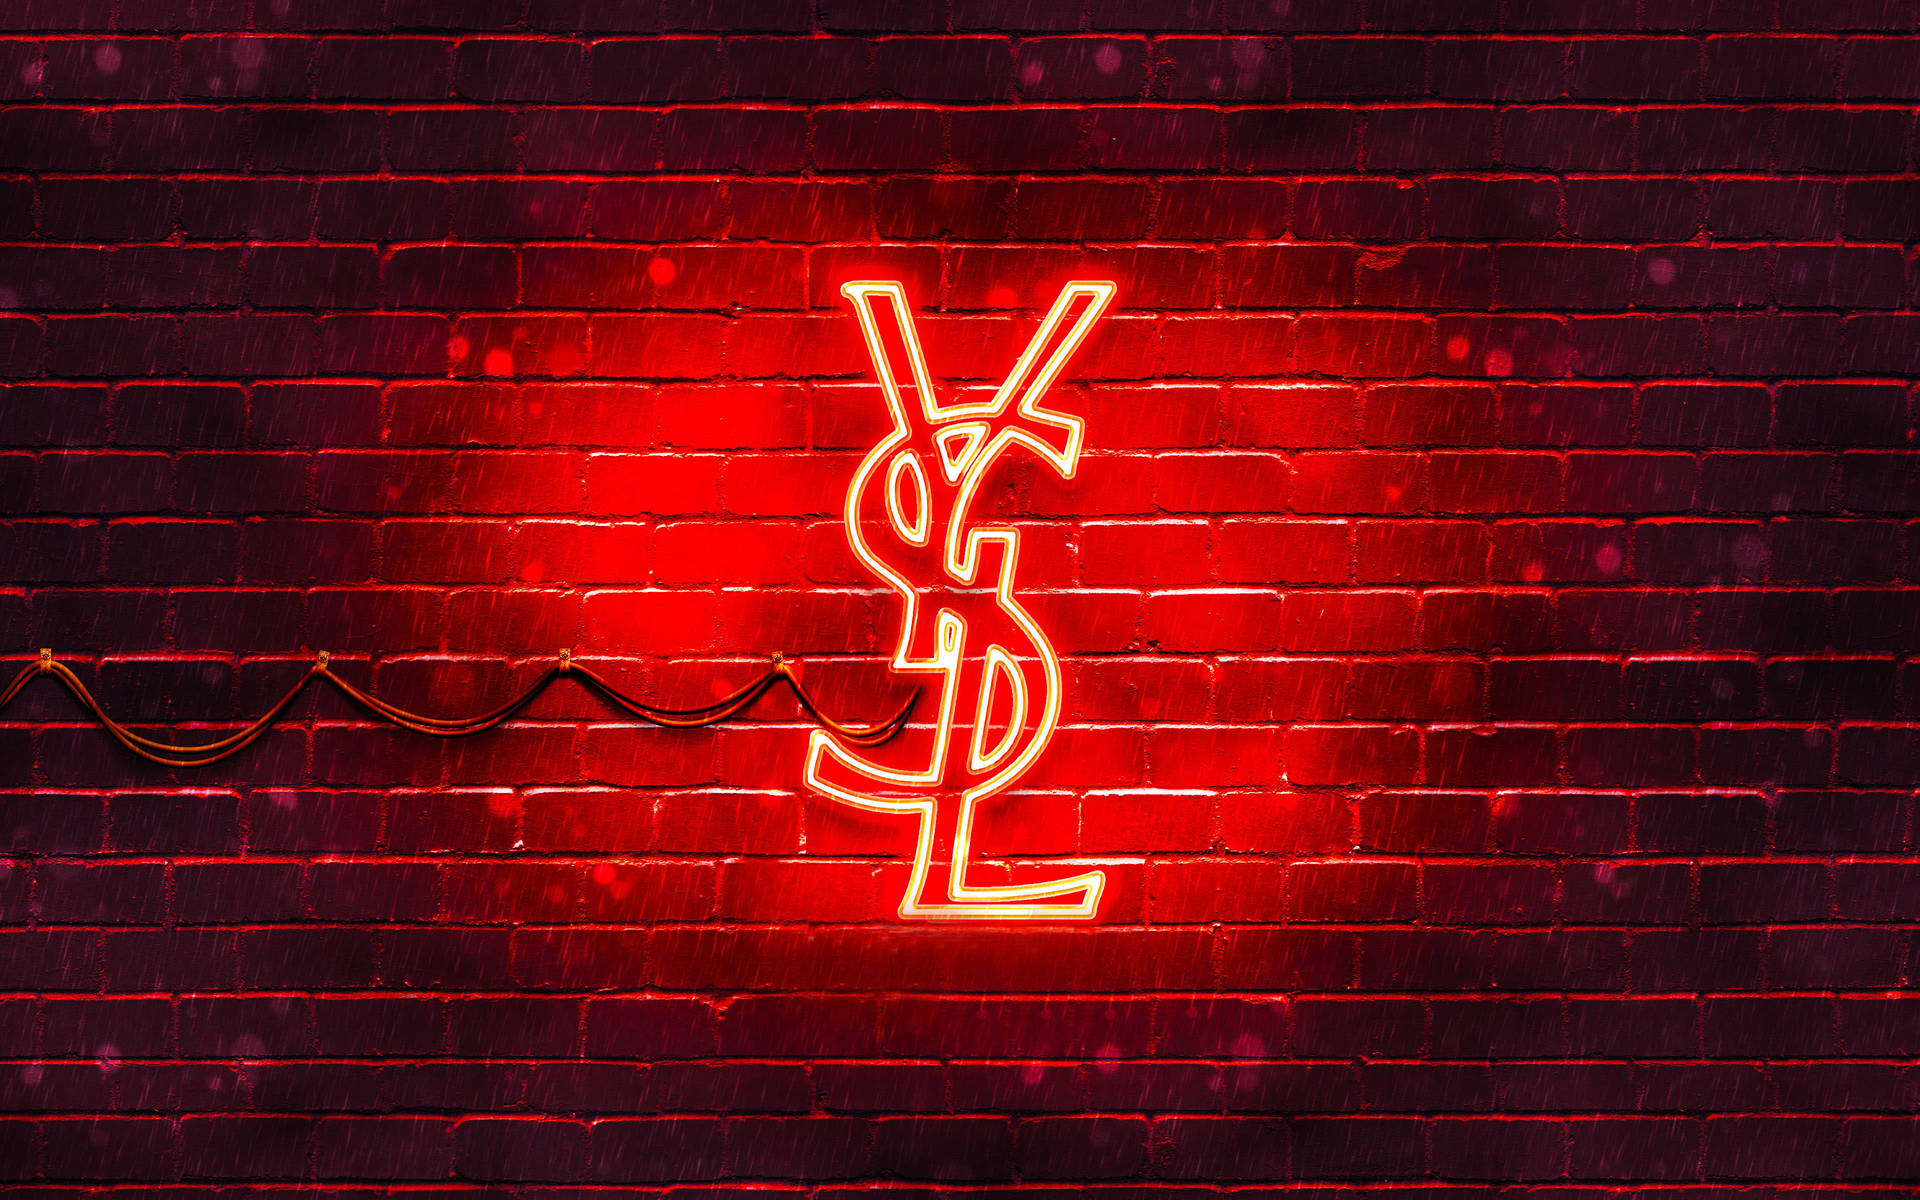 Red Ysl Neon Lighting Background